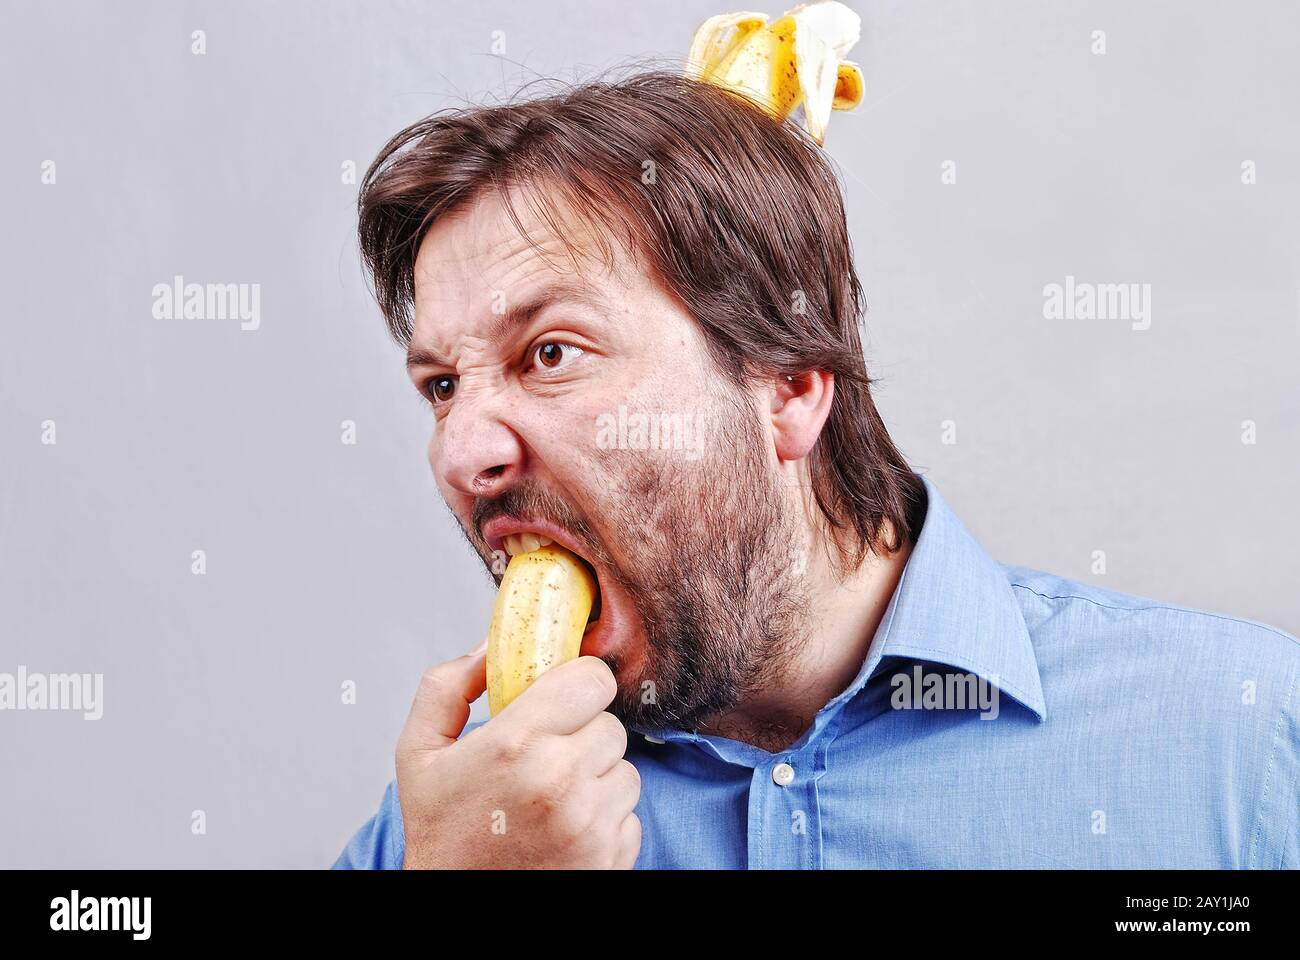 Картинки глупый парень. Человек банан. Парень с бананом. Банан у мужчин. Мужчина ест.